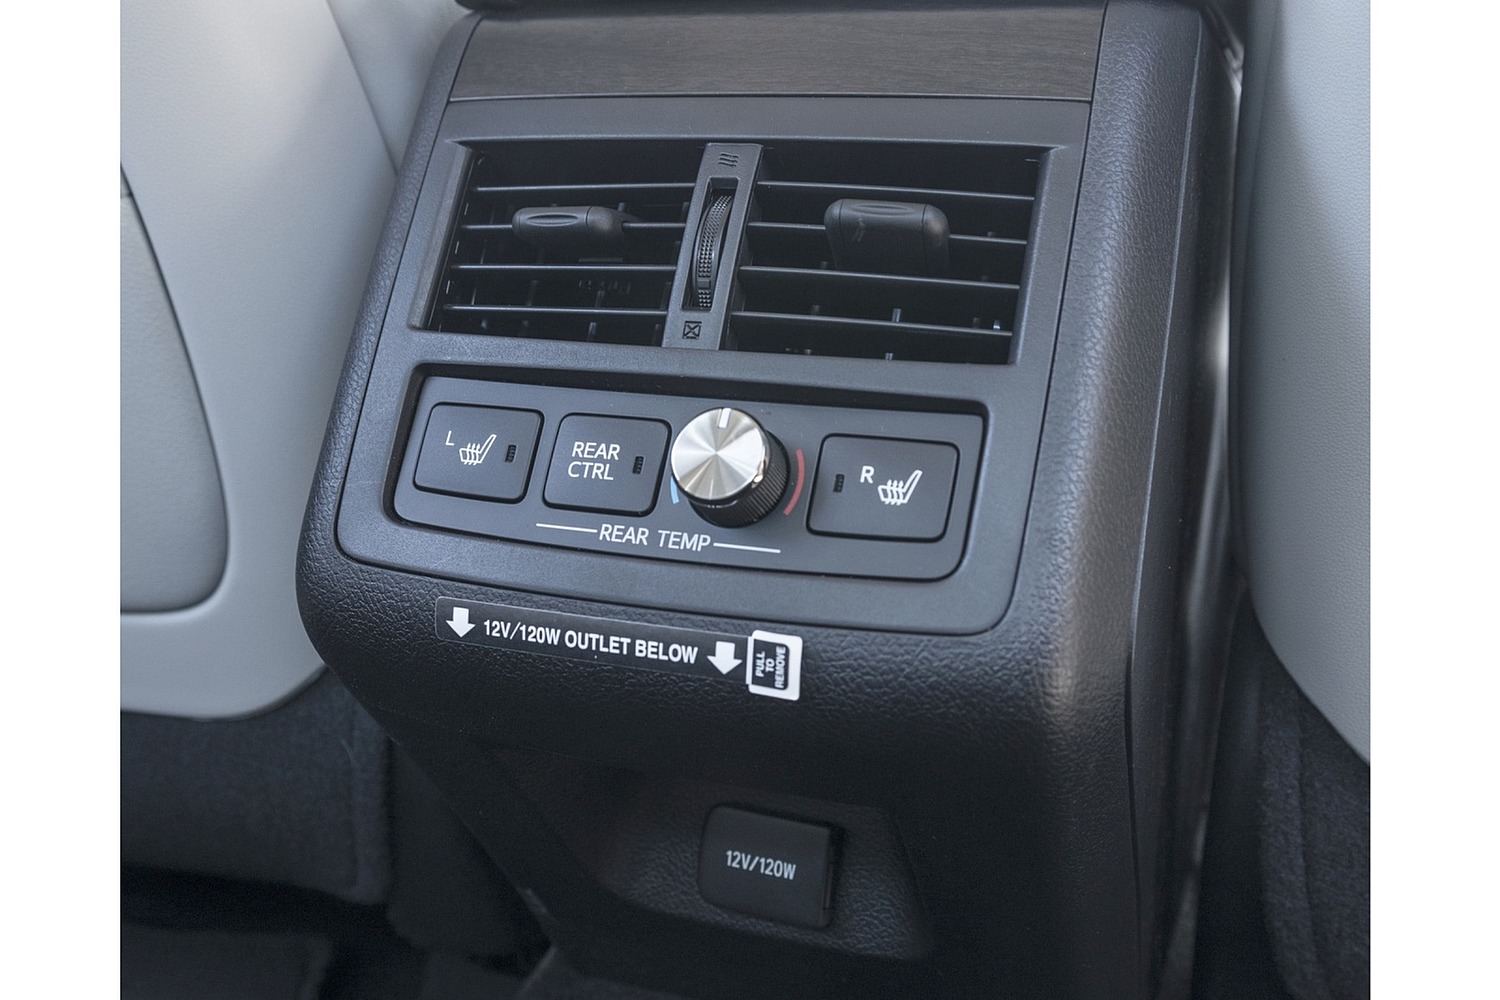 Toyota Avalon Hybrid Sedan Interior Detail (2017 model year shown)